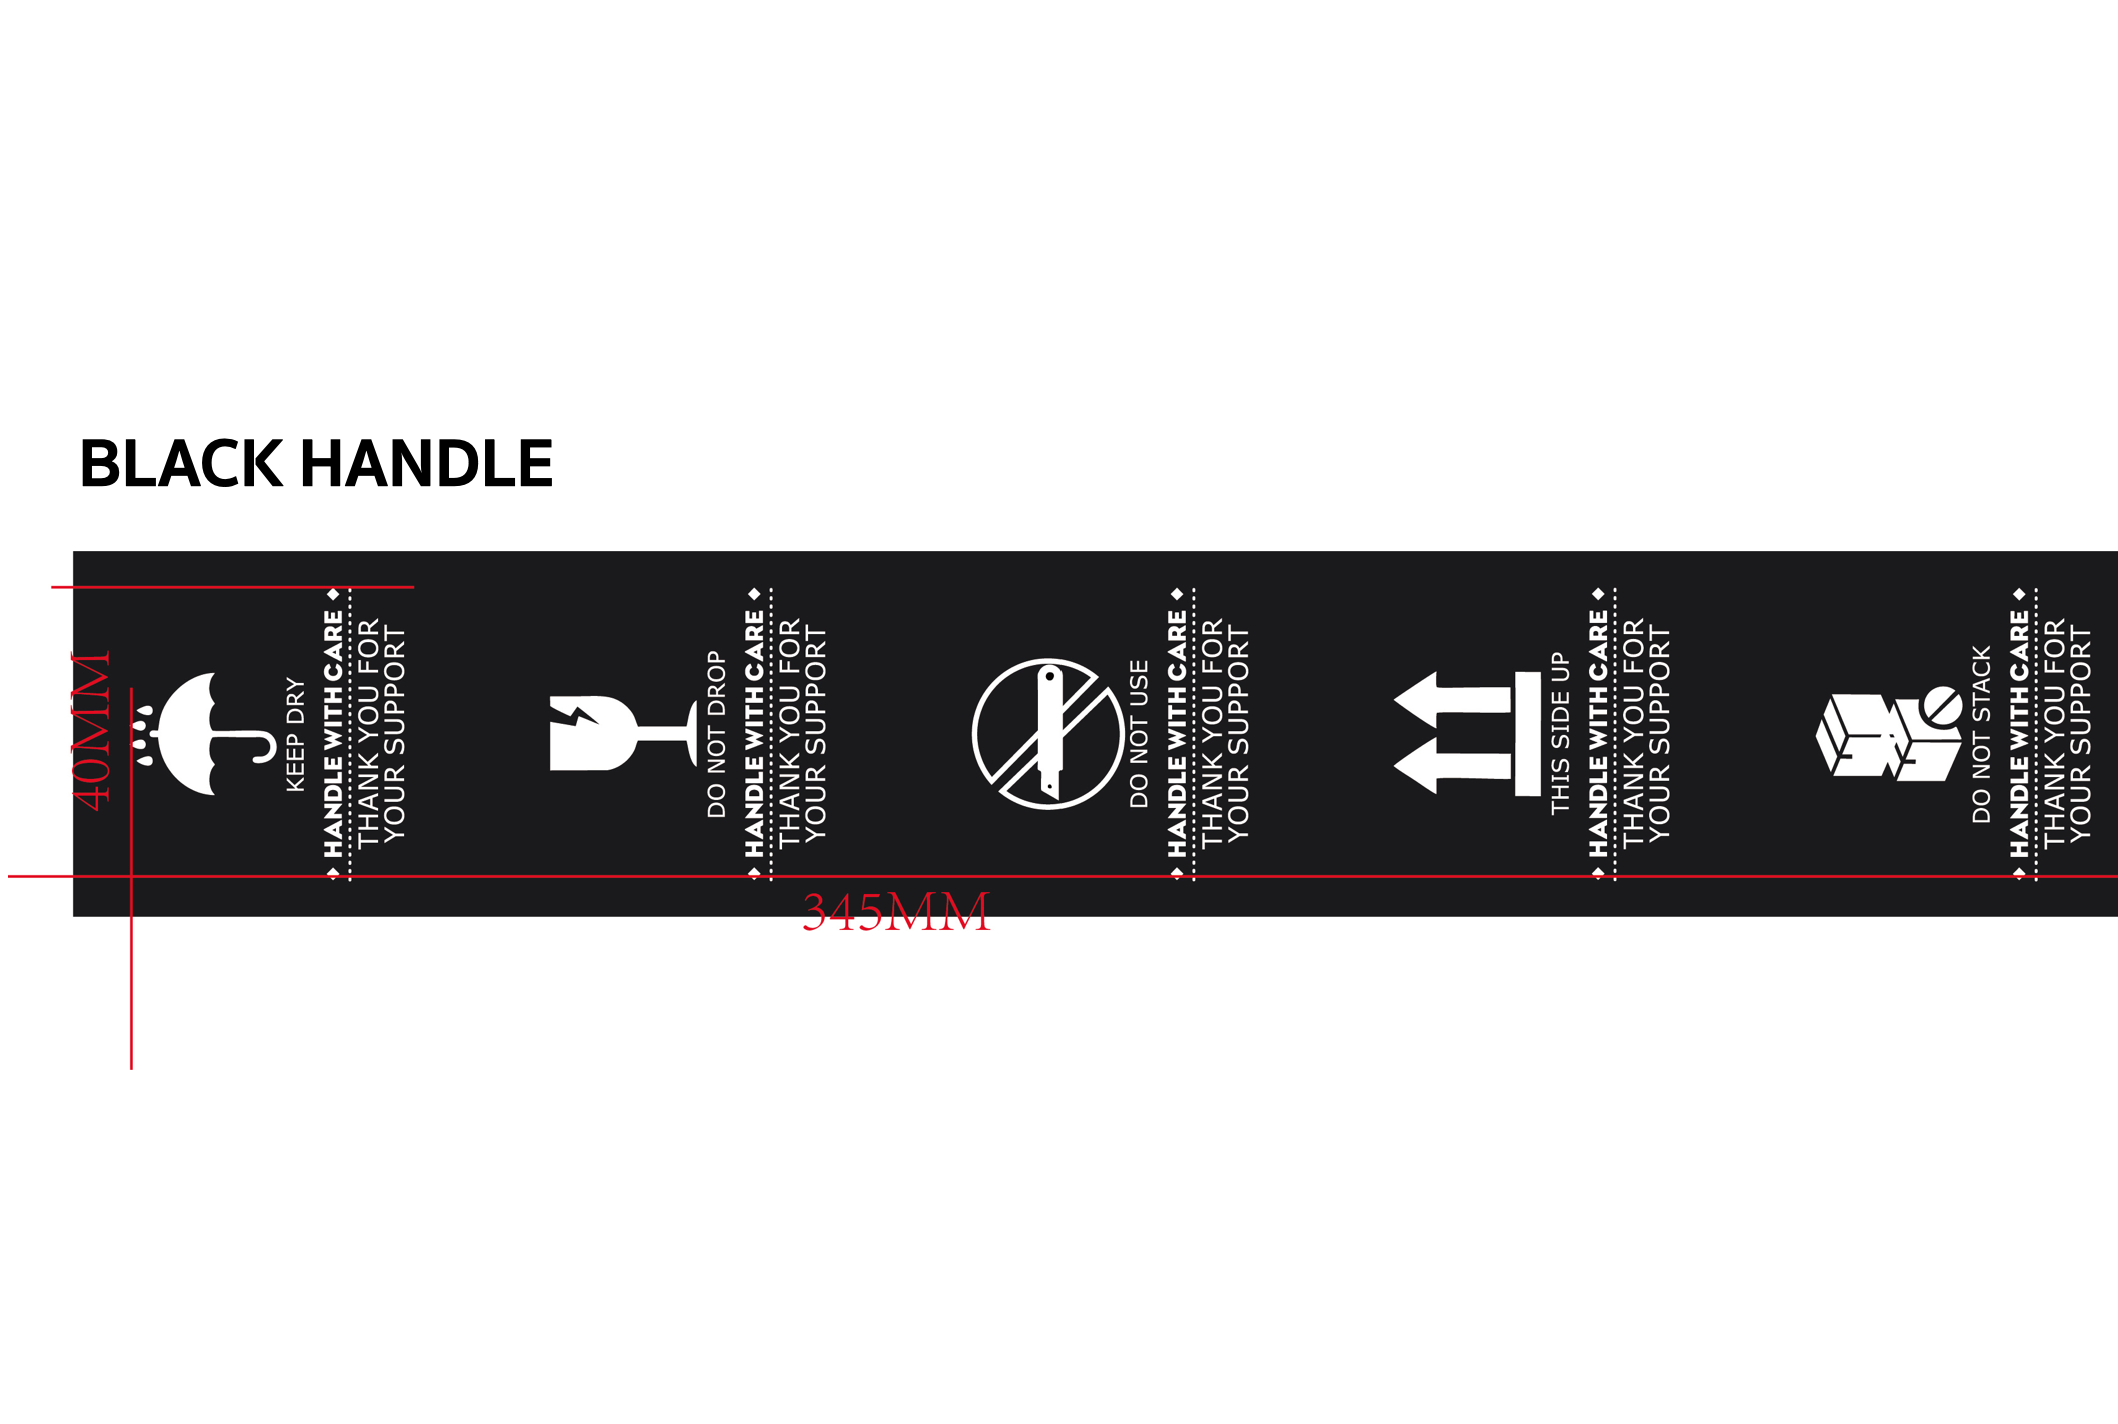 (Black handle) เทปพิมพ์ลาย เทประวังแตก tape fragile